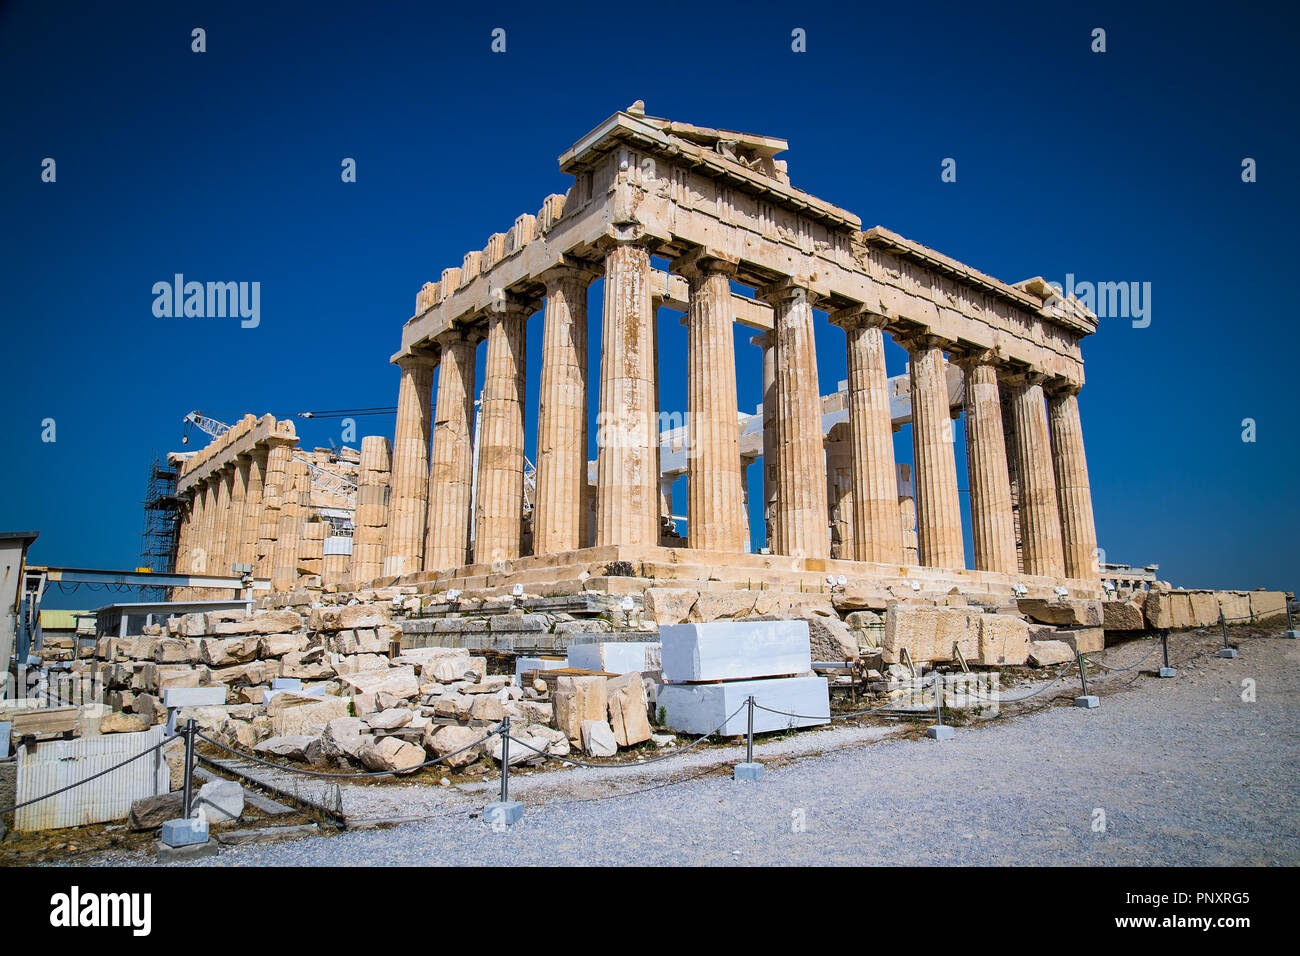 Parthenon on the Acropolis of Athens, Greece. The famous ancient Greek Parthenon is the main landmark of Athens. Ruins of Parthenon or temple of Athen Stock Photo